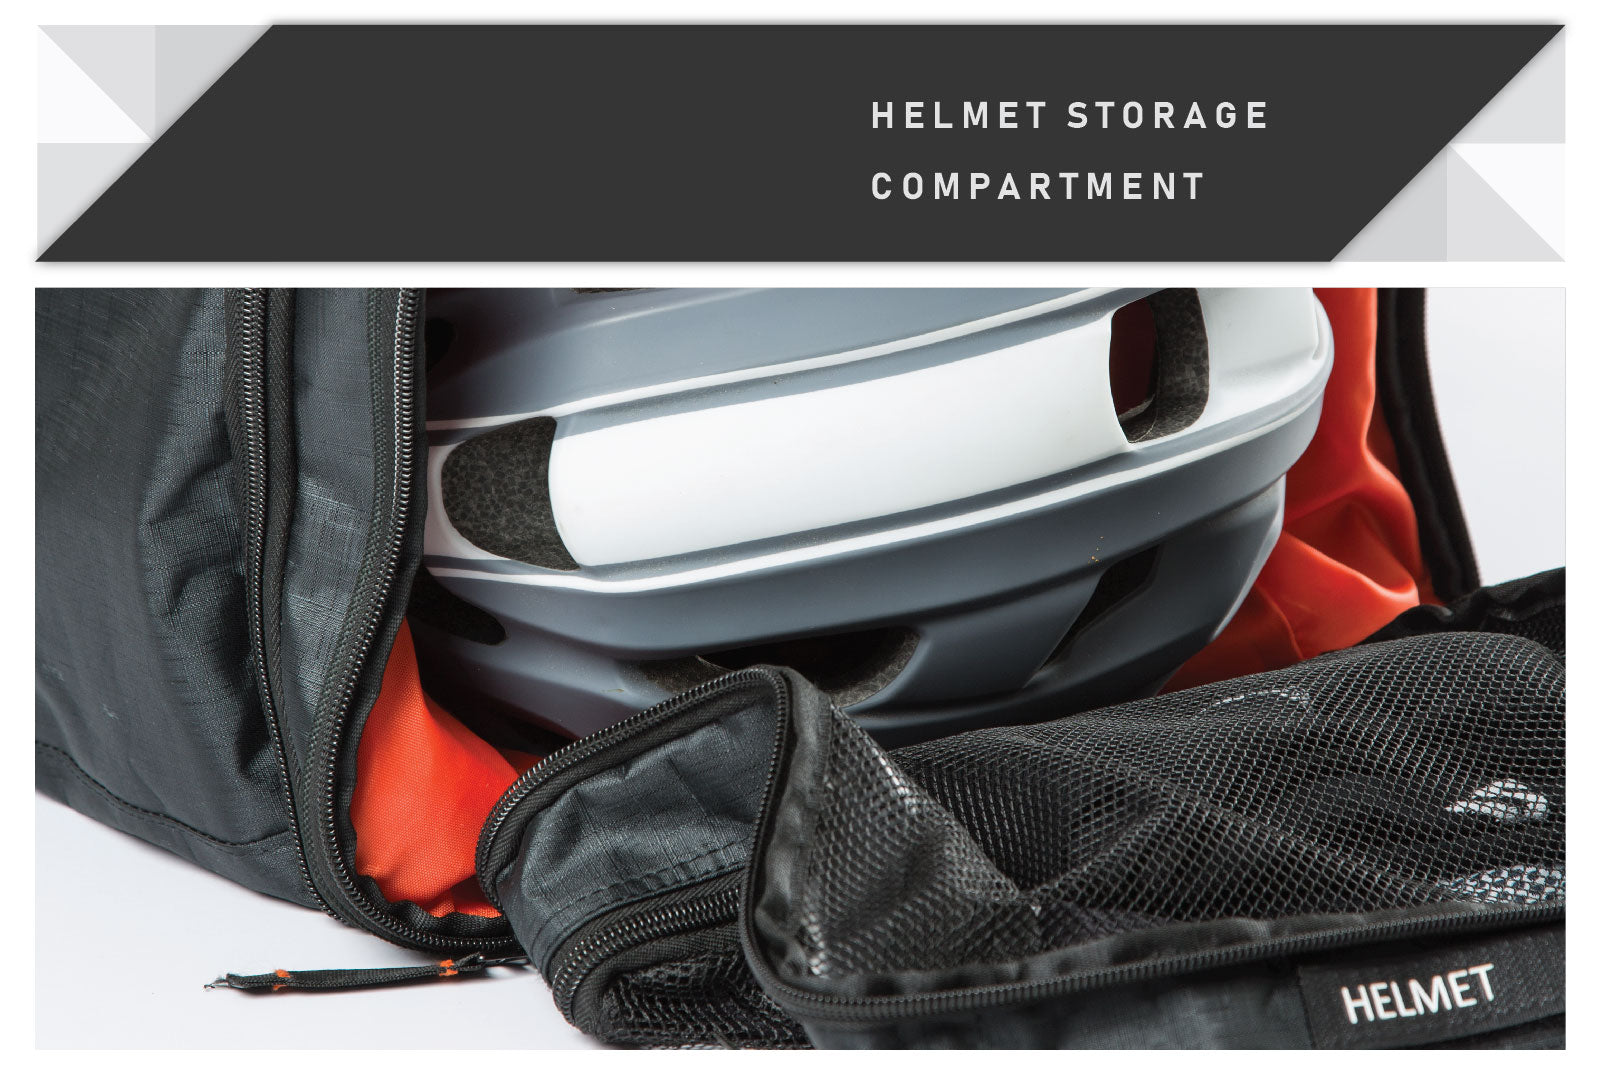 Cycling kit bag with dedicated helmet storage